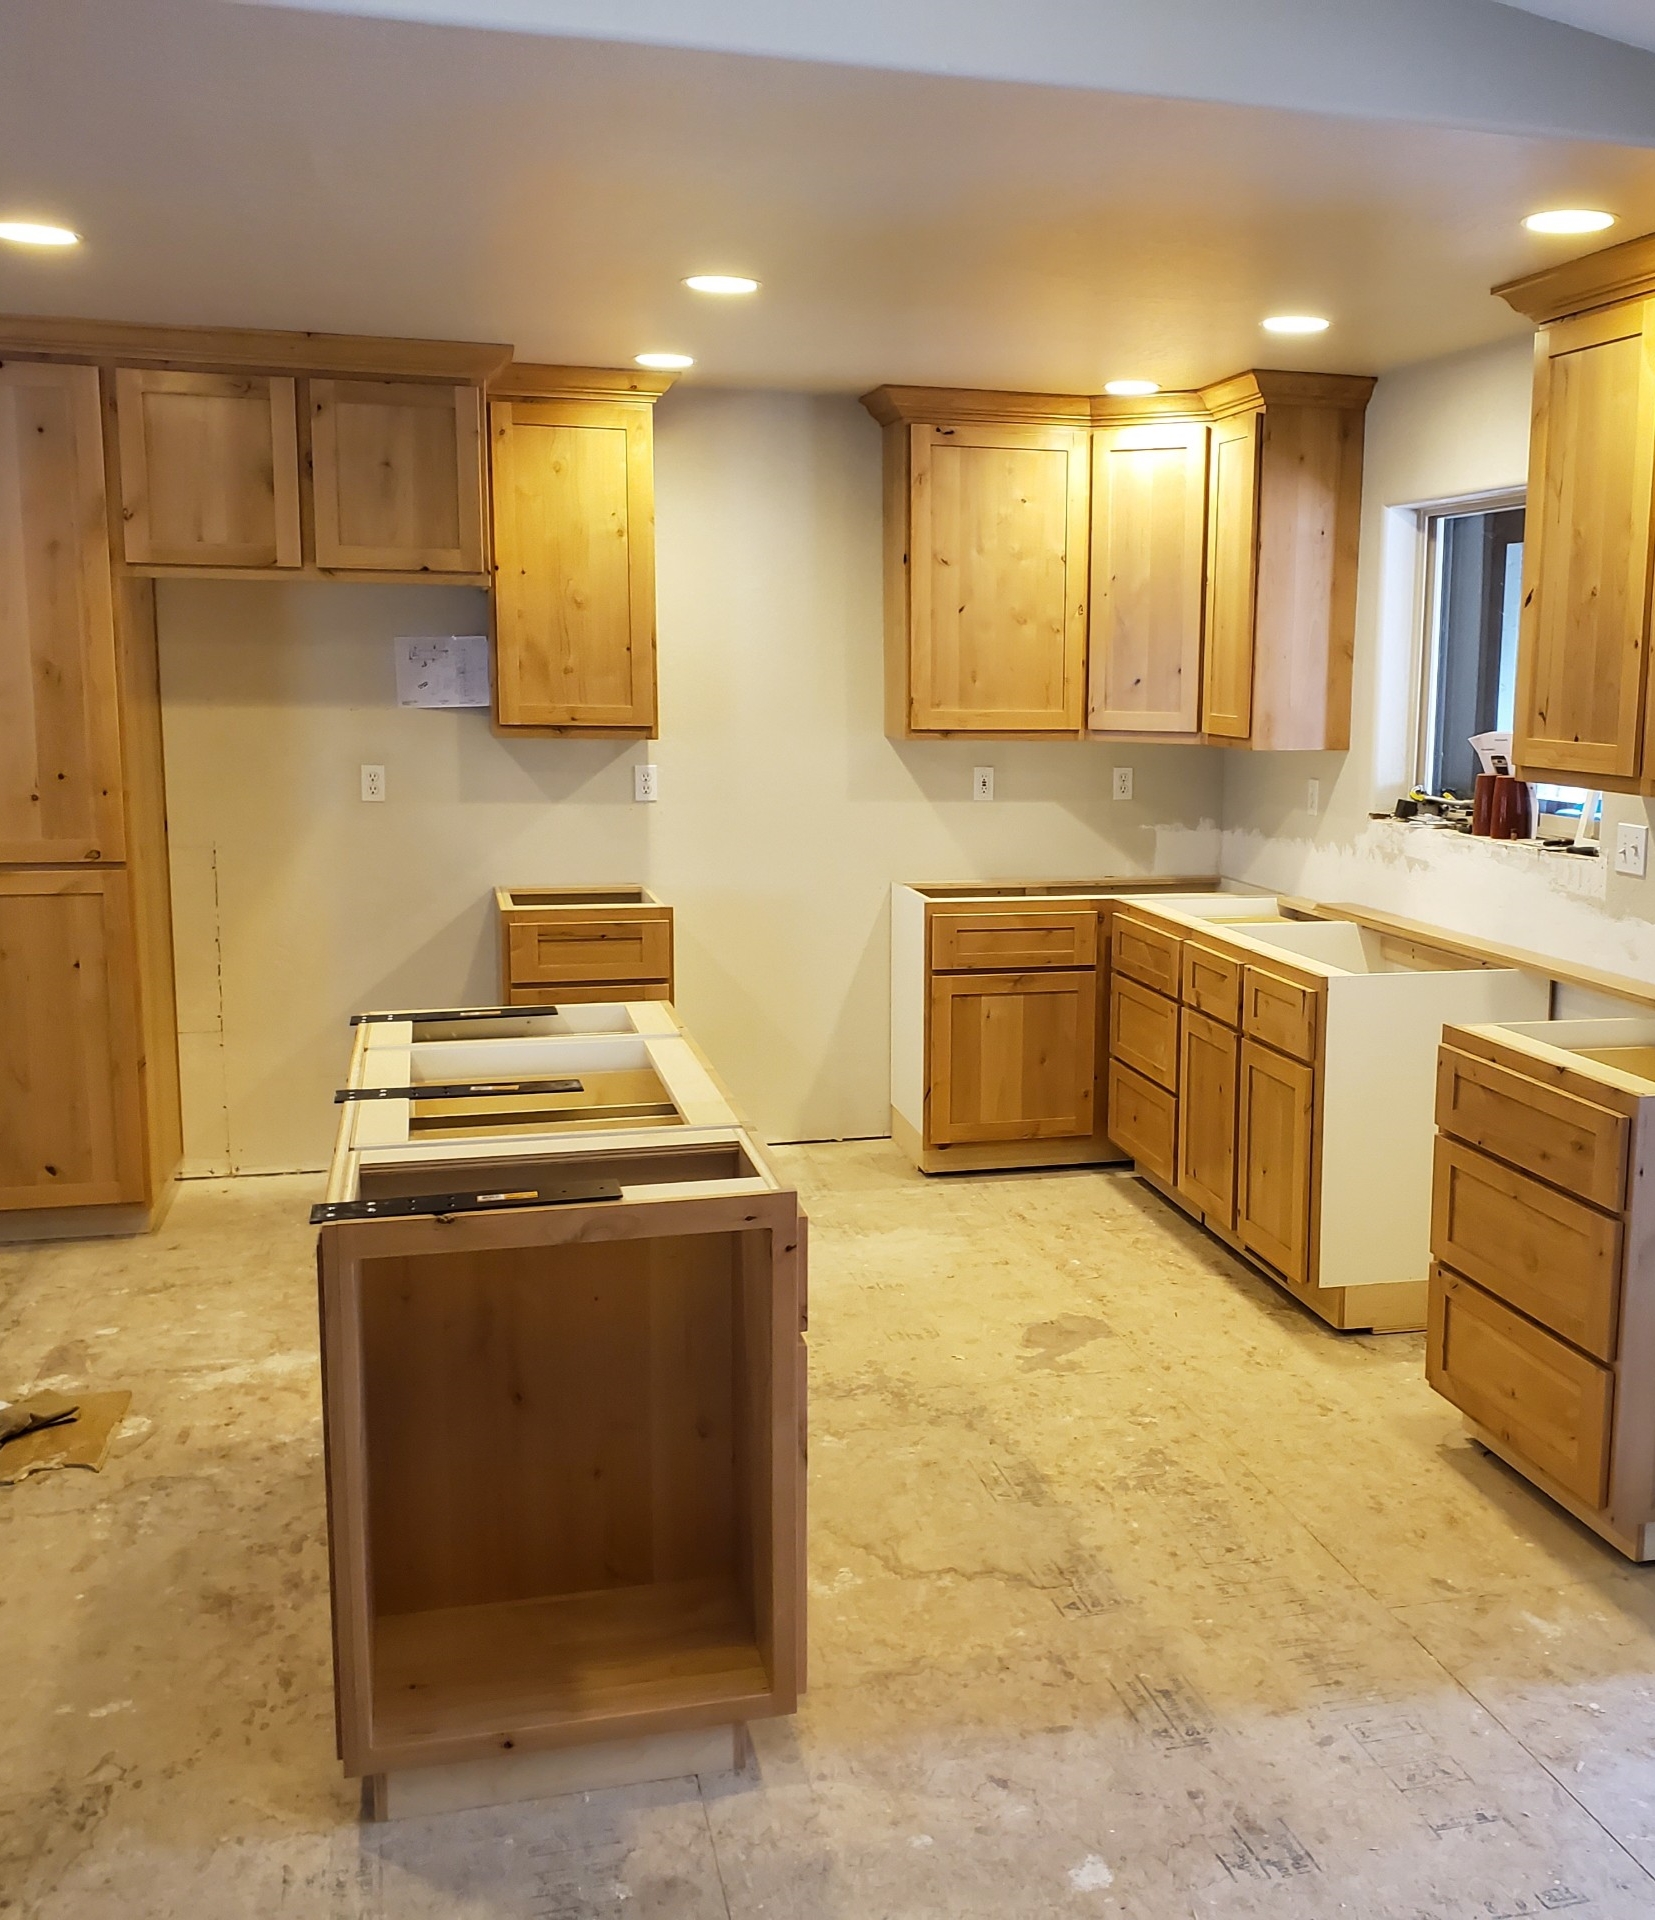 Unfinished kitchen